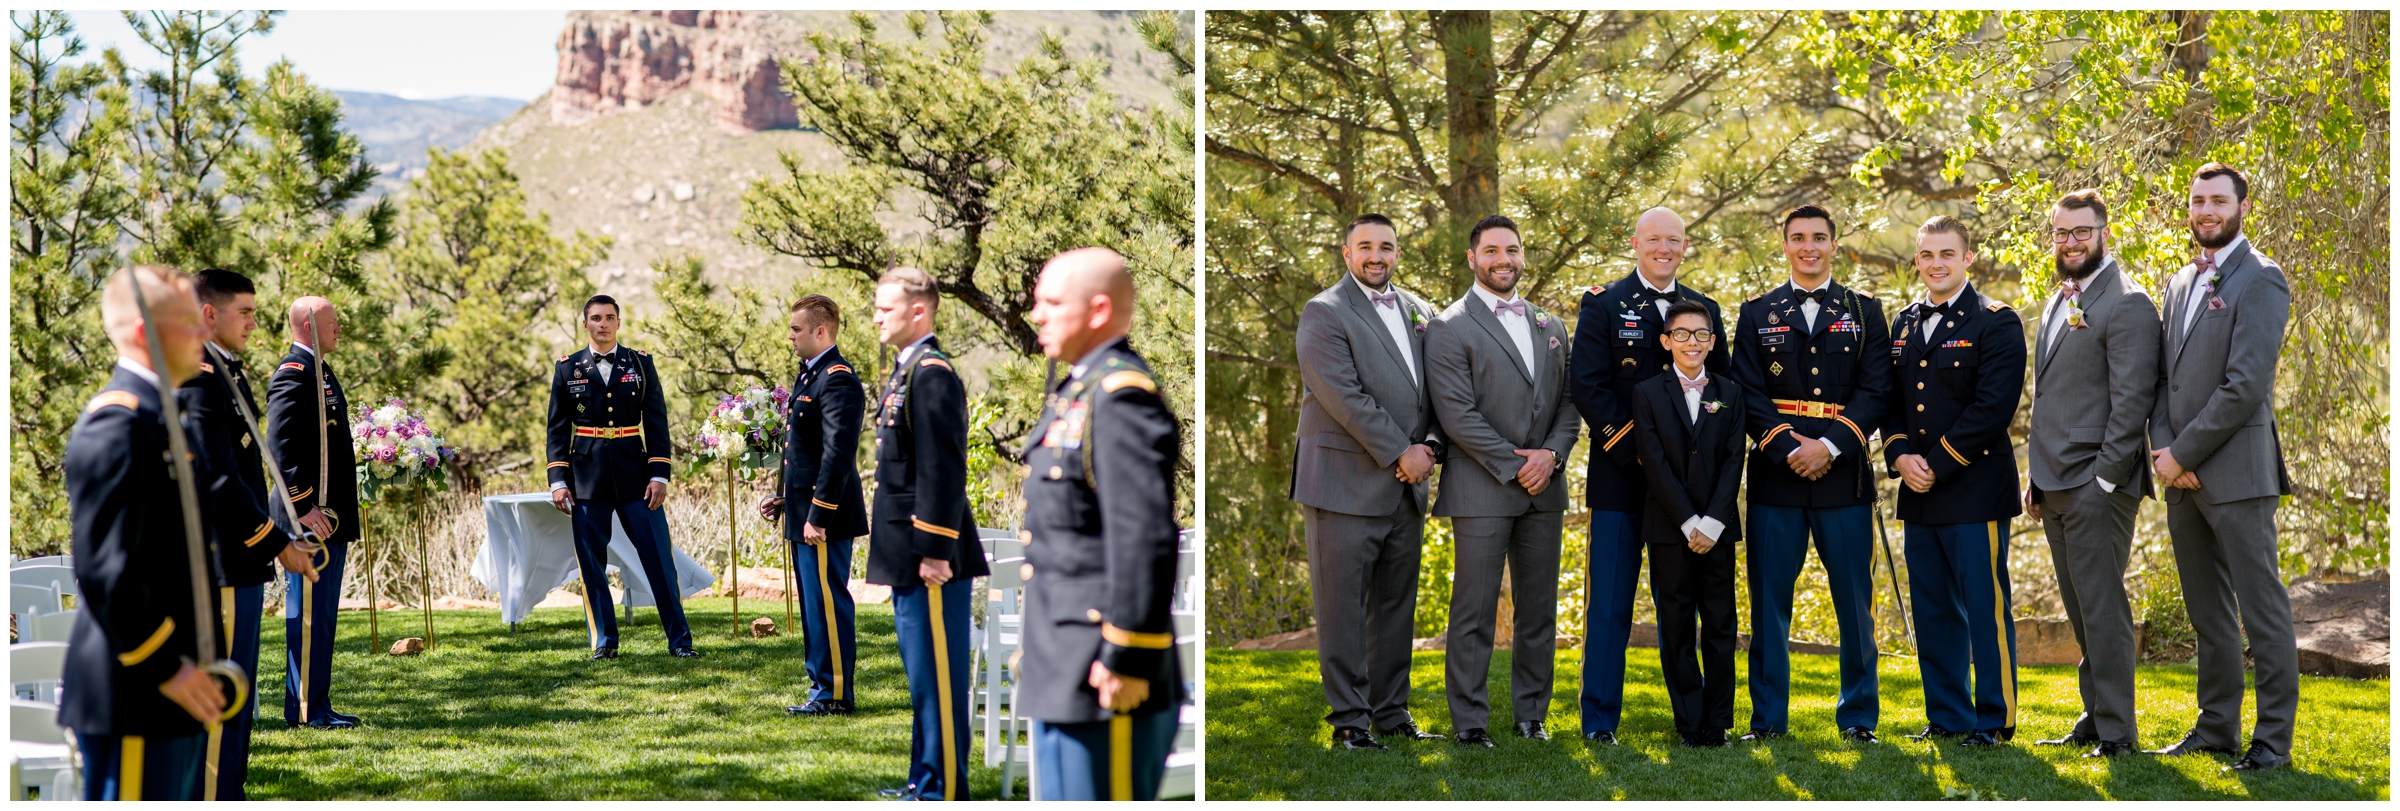 Colorado military groom posing with groomsmen in uniform